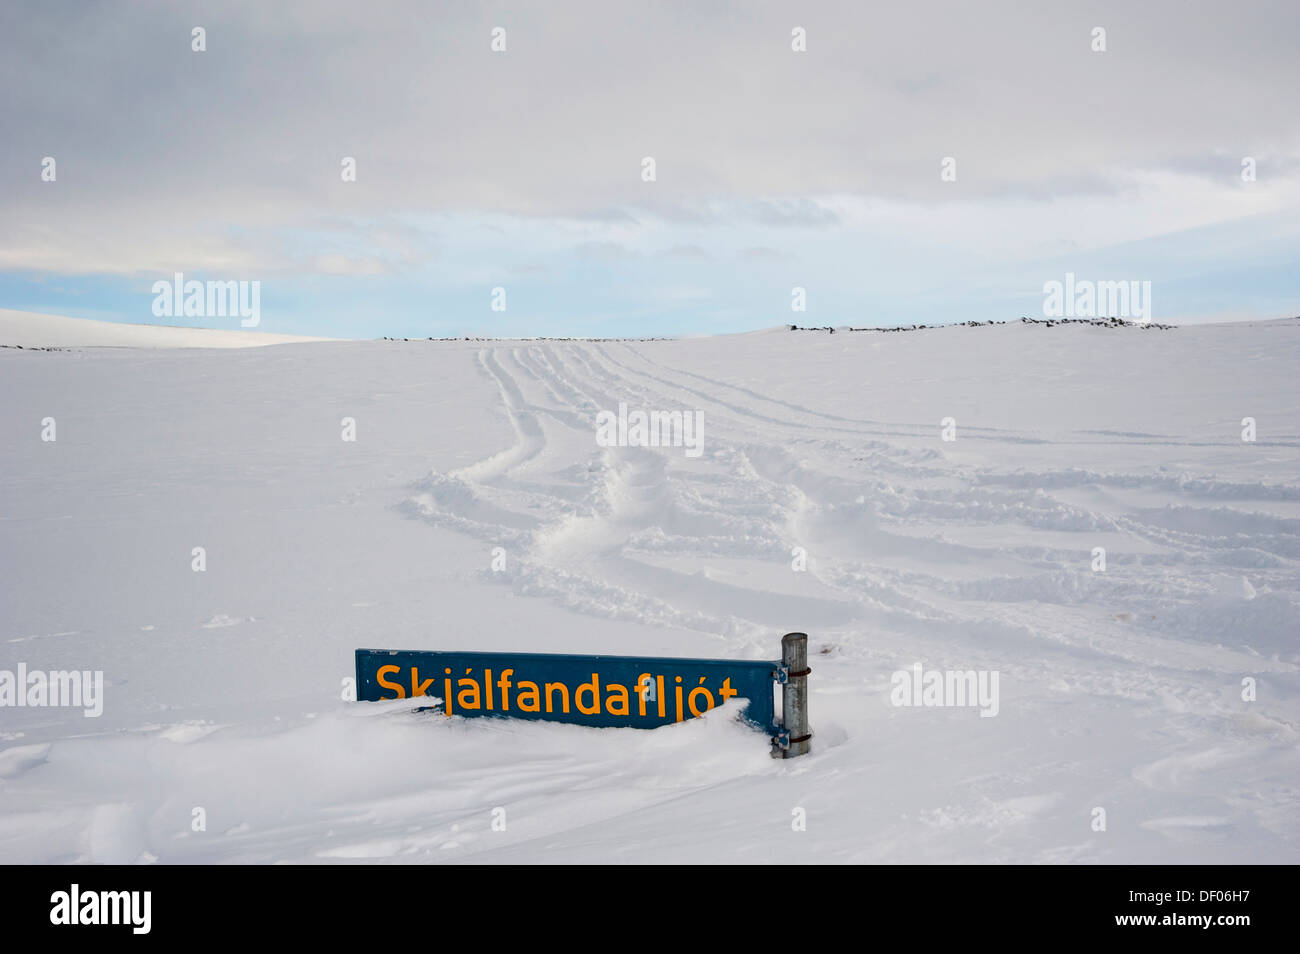 Snow-covered street sign, Vatnajoekull Glacier, Icelandic Highlands, Iceland, Europe Stock Photo